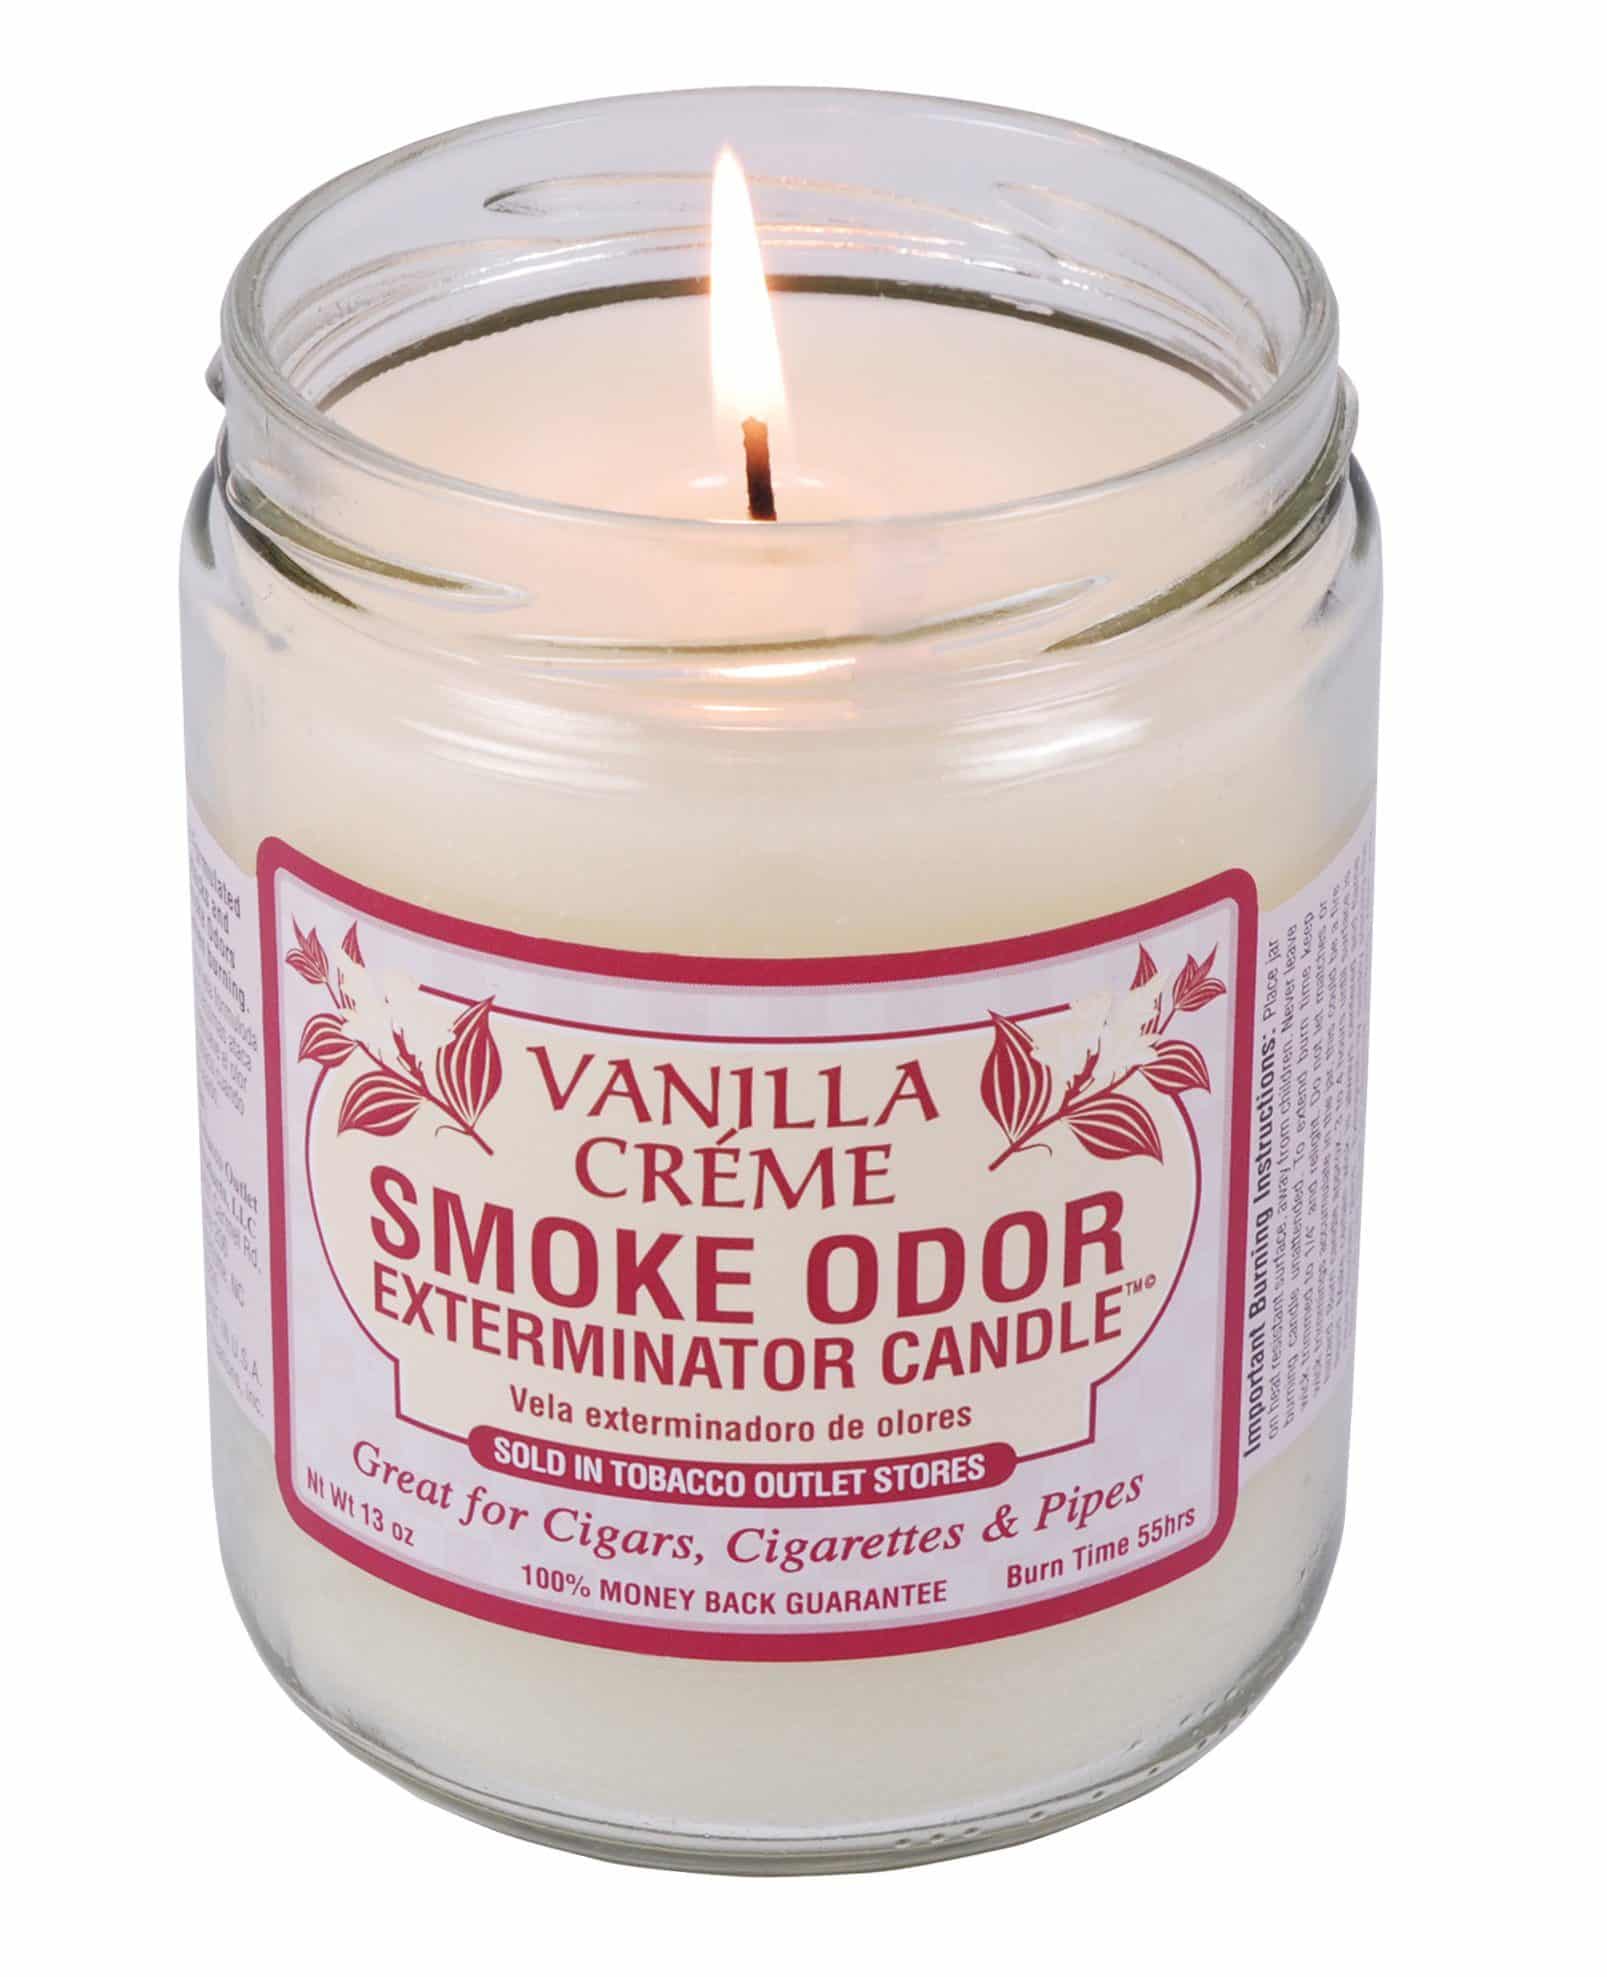 smoke odor exterminator candle vanilla creme